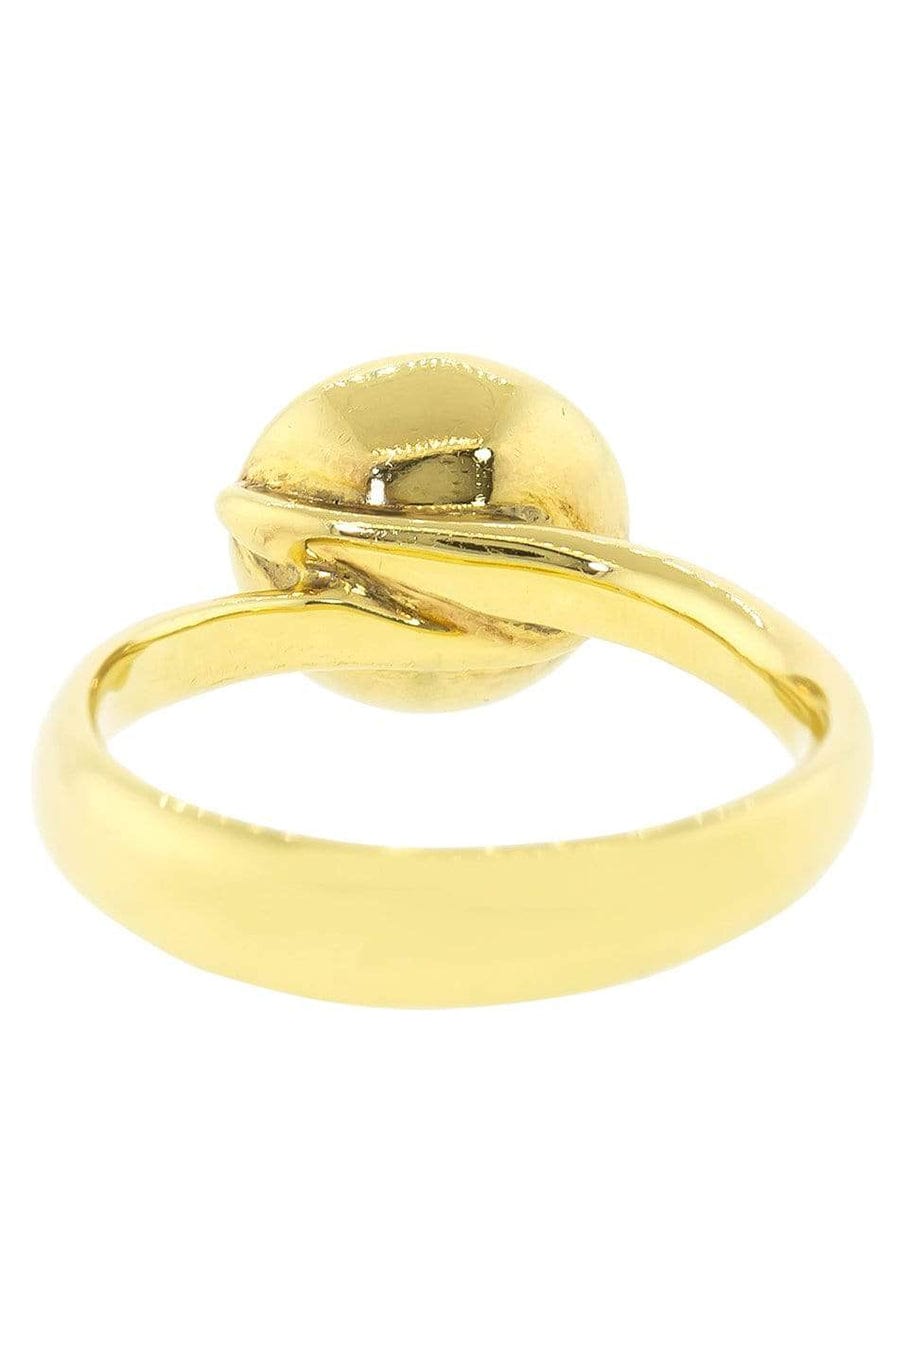 TAMARA COMOLLI-Amethyst Small Bouton Ring-YELLOW GOLD